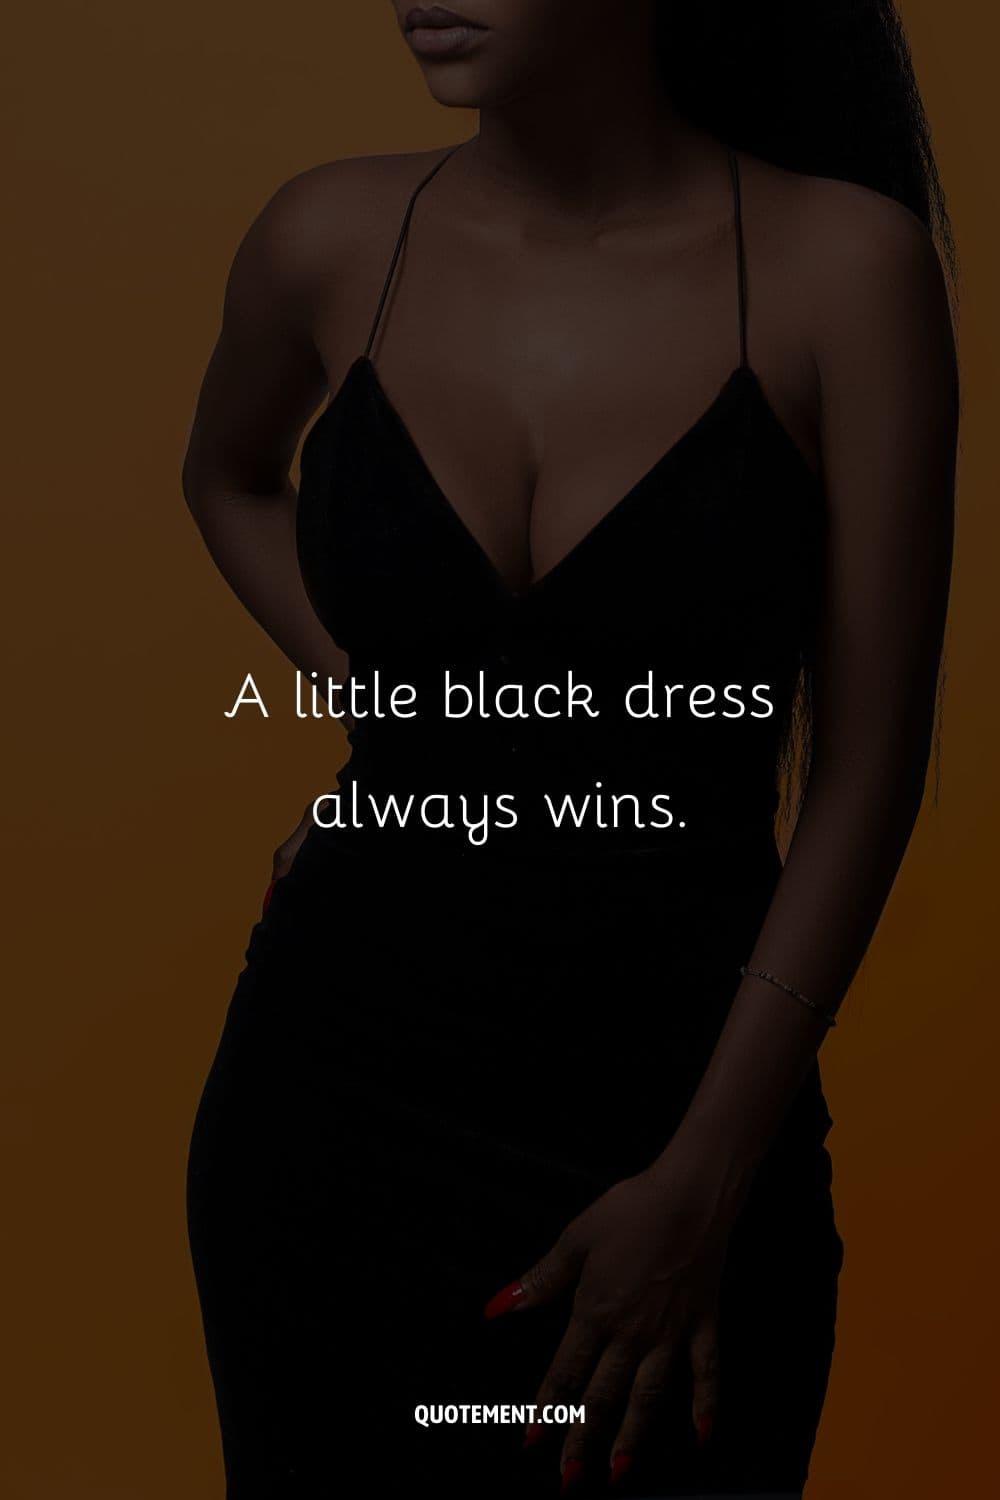 A little black dress always wins.